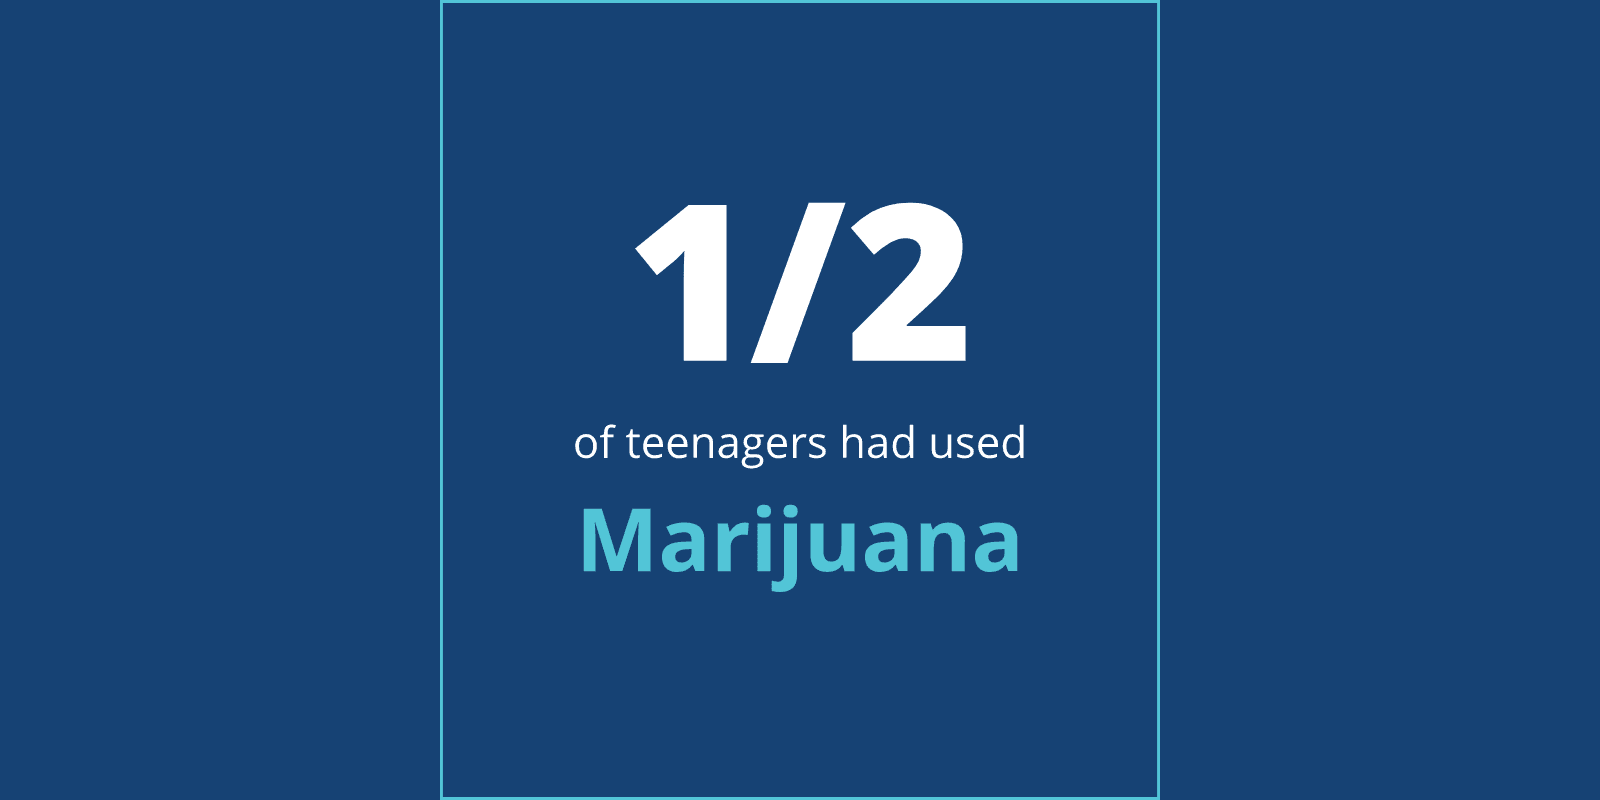 A half of teenagers had used Marijuana